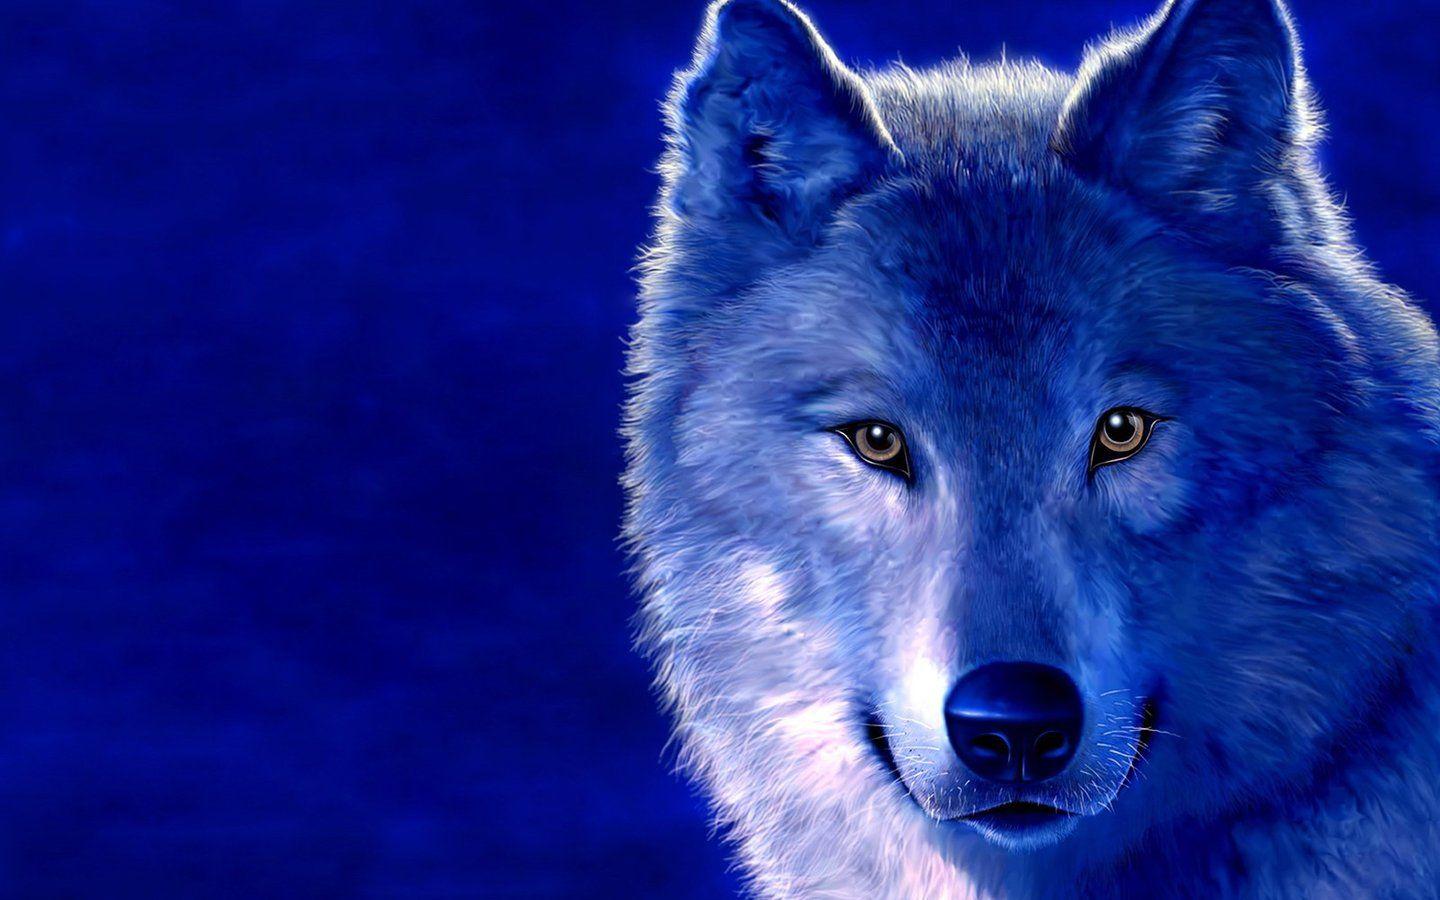 Download wallpaper: ice wolf, photo, Wolves, wallpaper for desktop